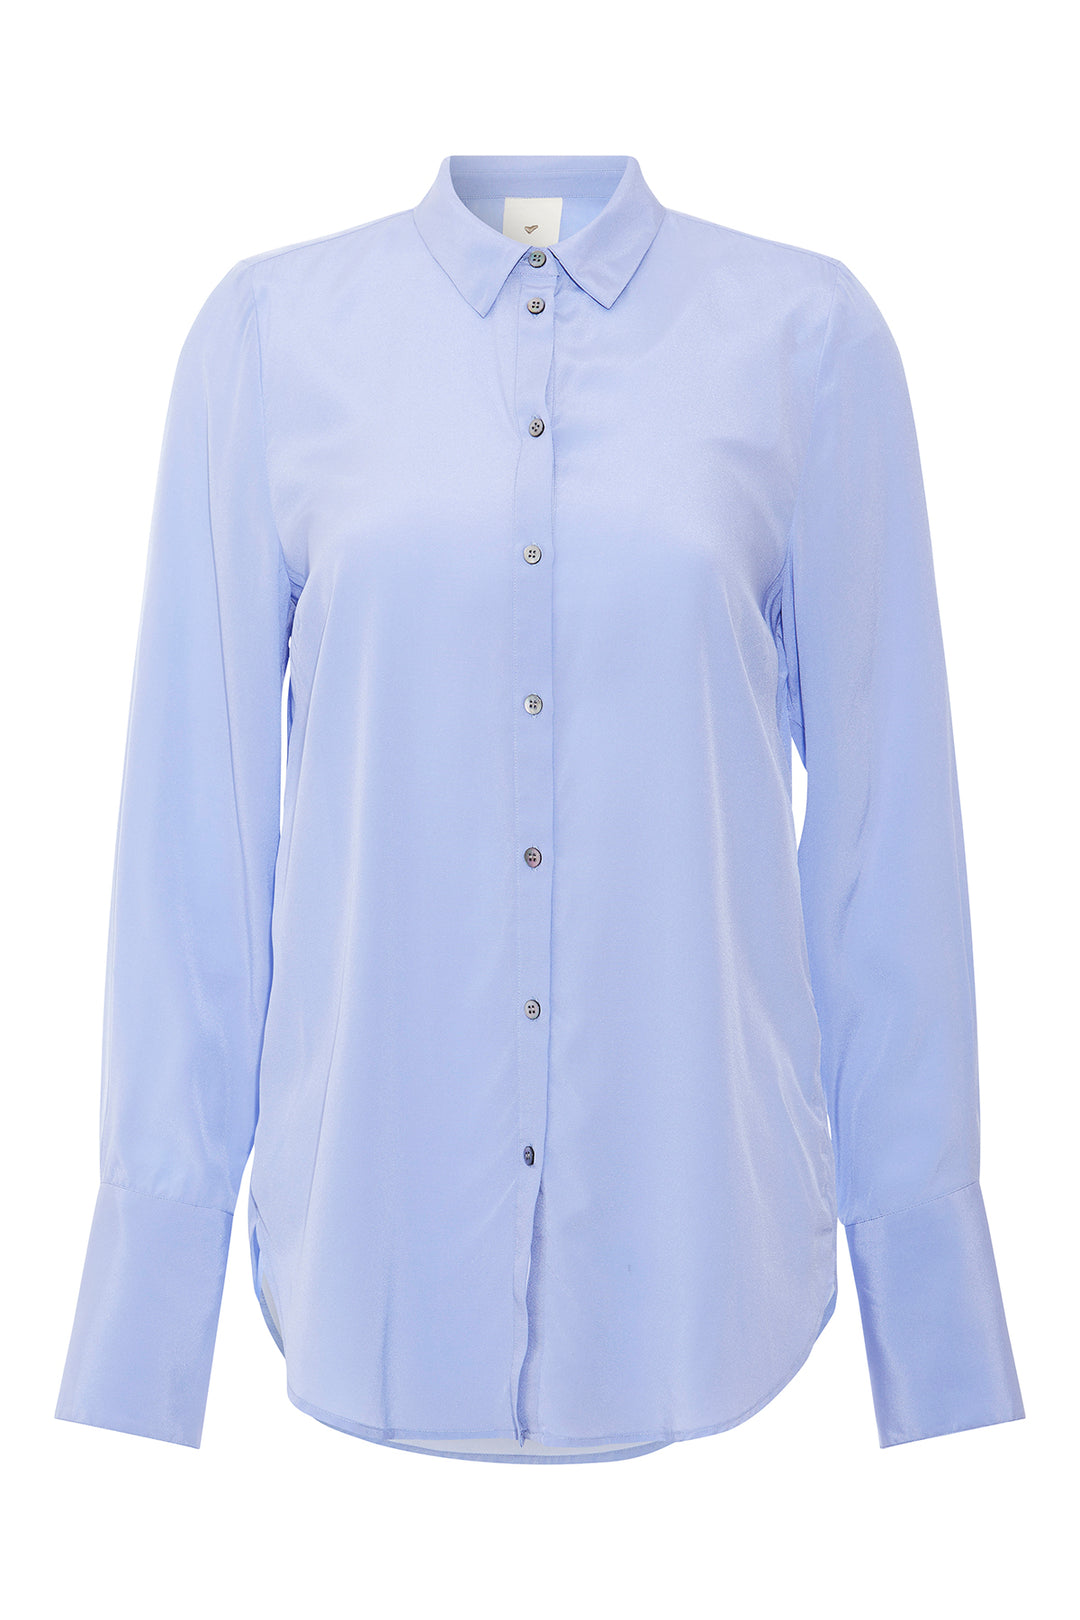 Heartmade Miri shirt HM SHIRTS 277 Cornflower blue